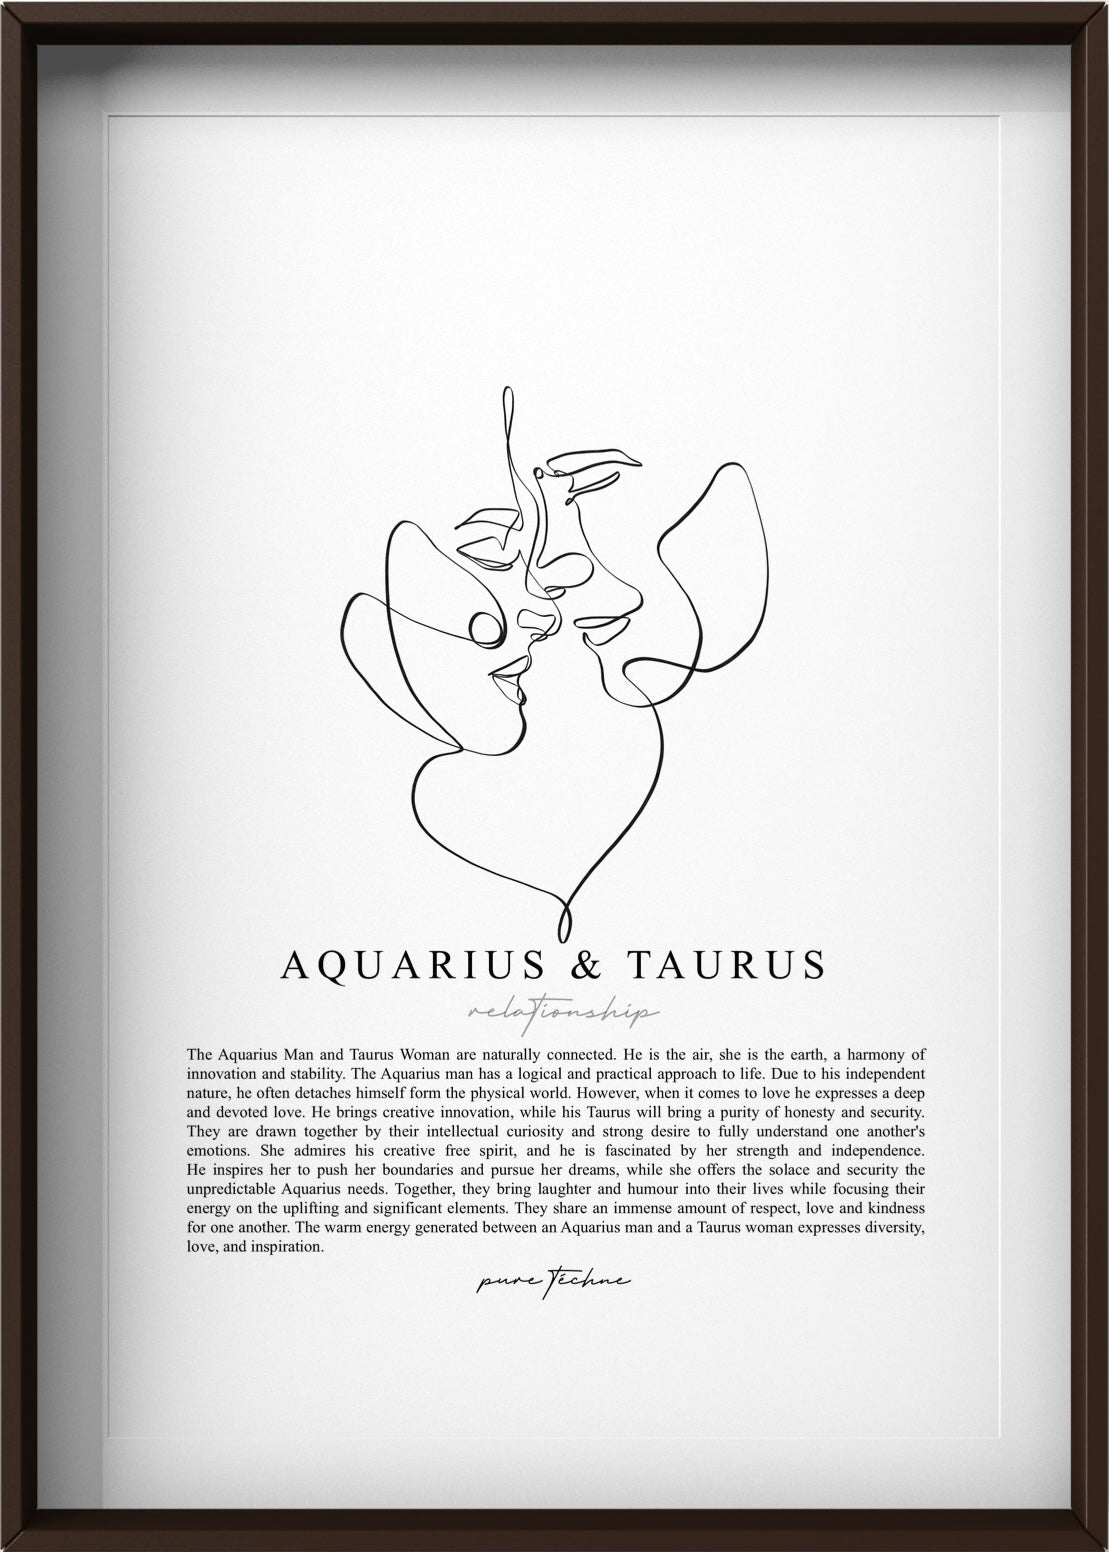 Aquarius Man & Taurus Woman